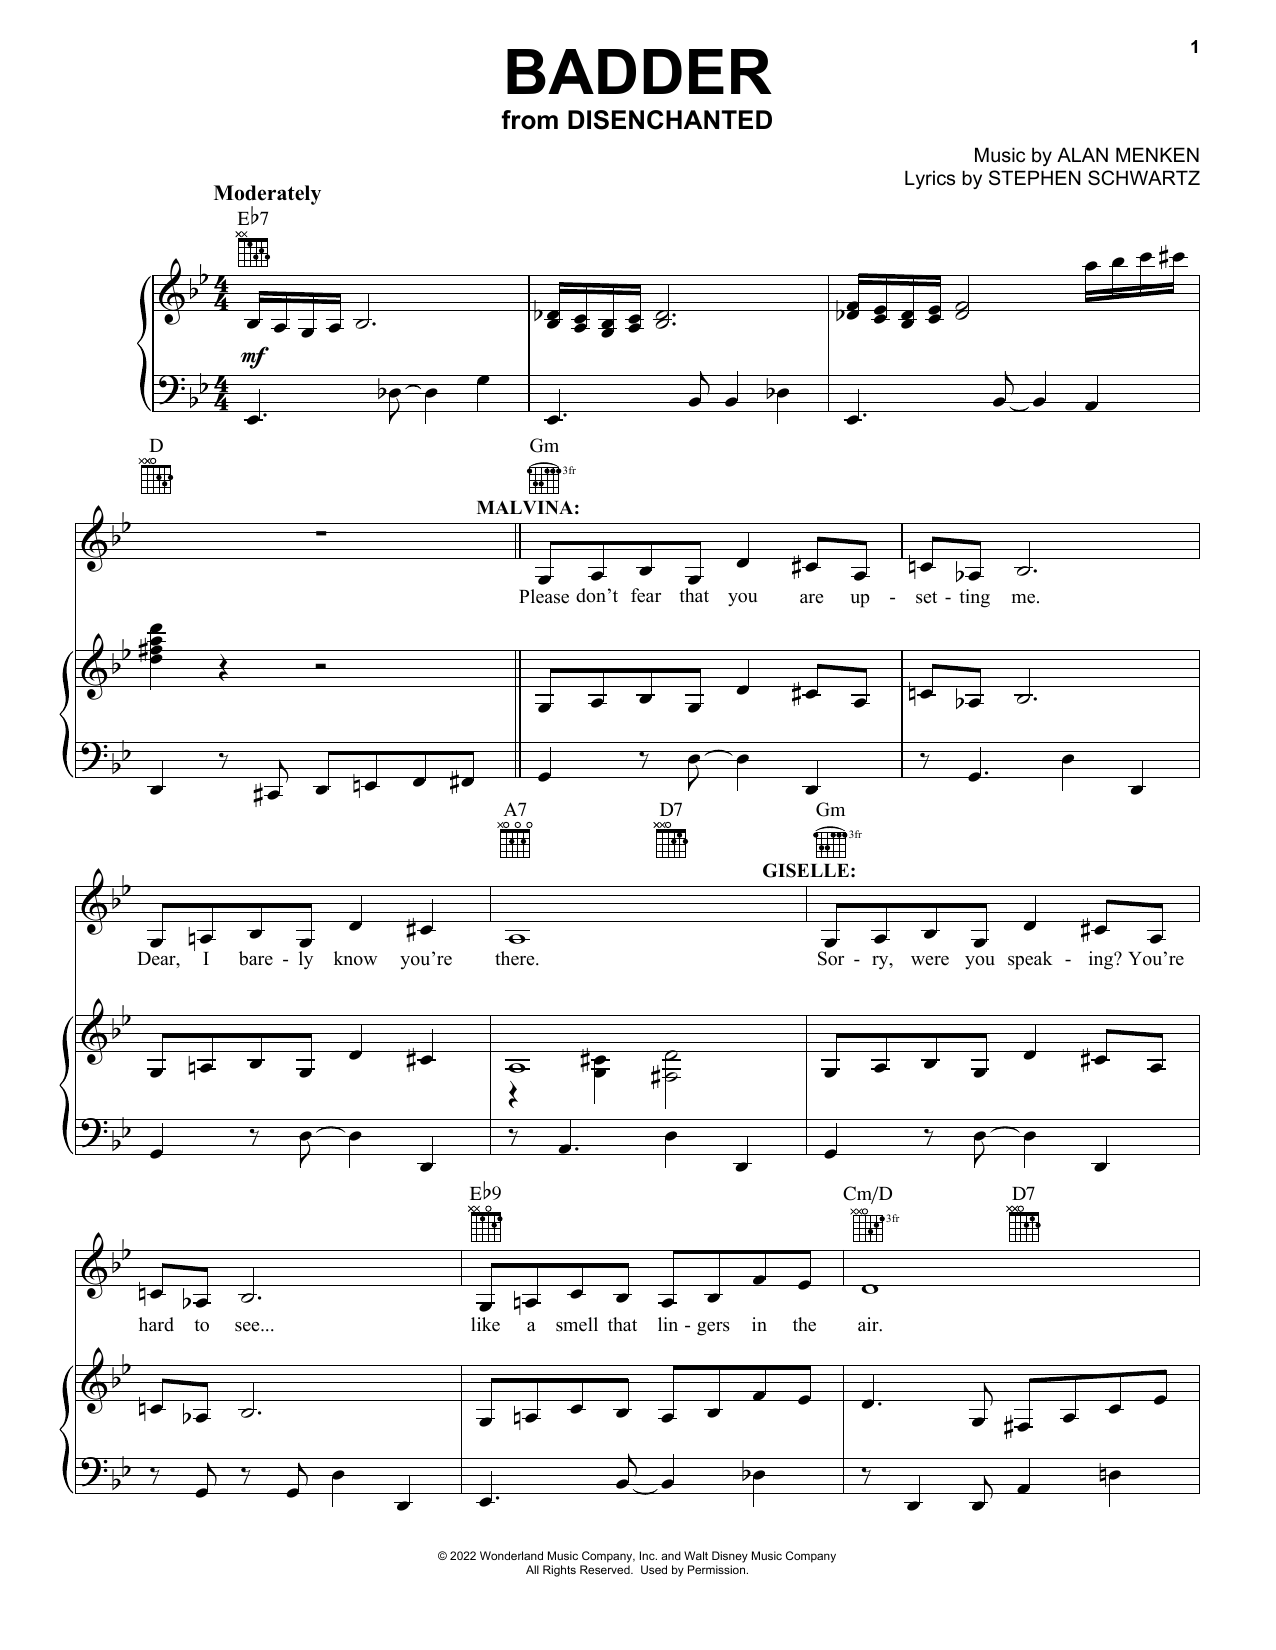 Amy Adams and Maya Rudolph Badder (from Disenchanted) Sheet Music Notes & Chords for Piano, Vocal & Guitar Chords (Right-Hand Melody) - Download or Print PDF